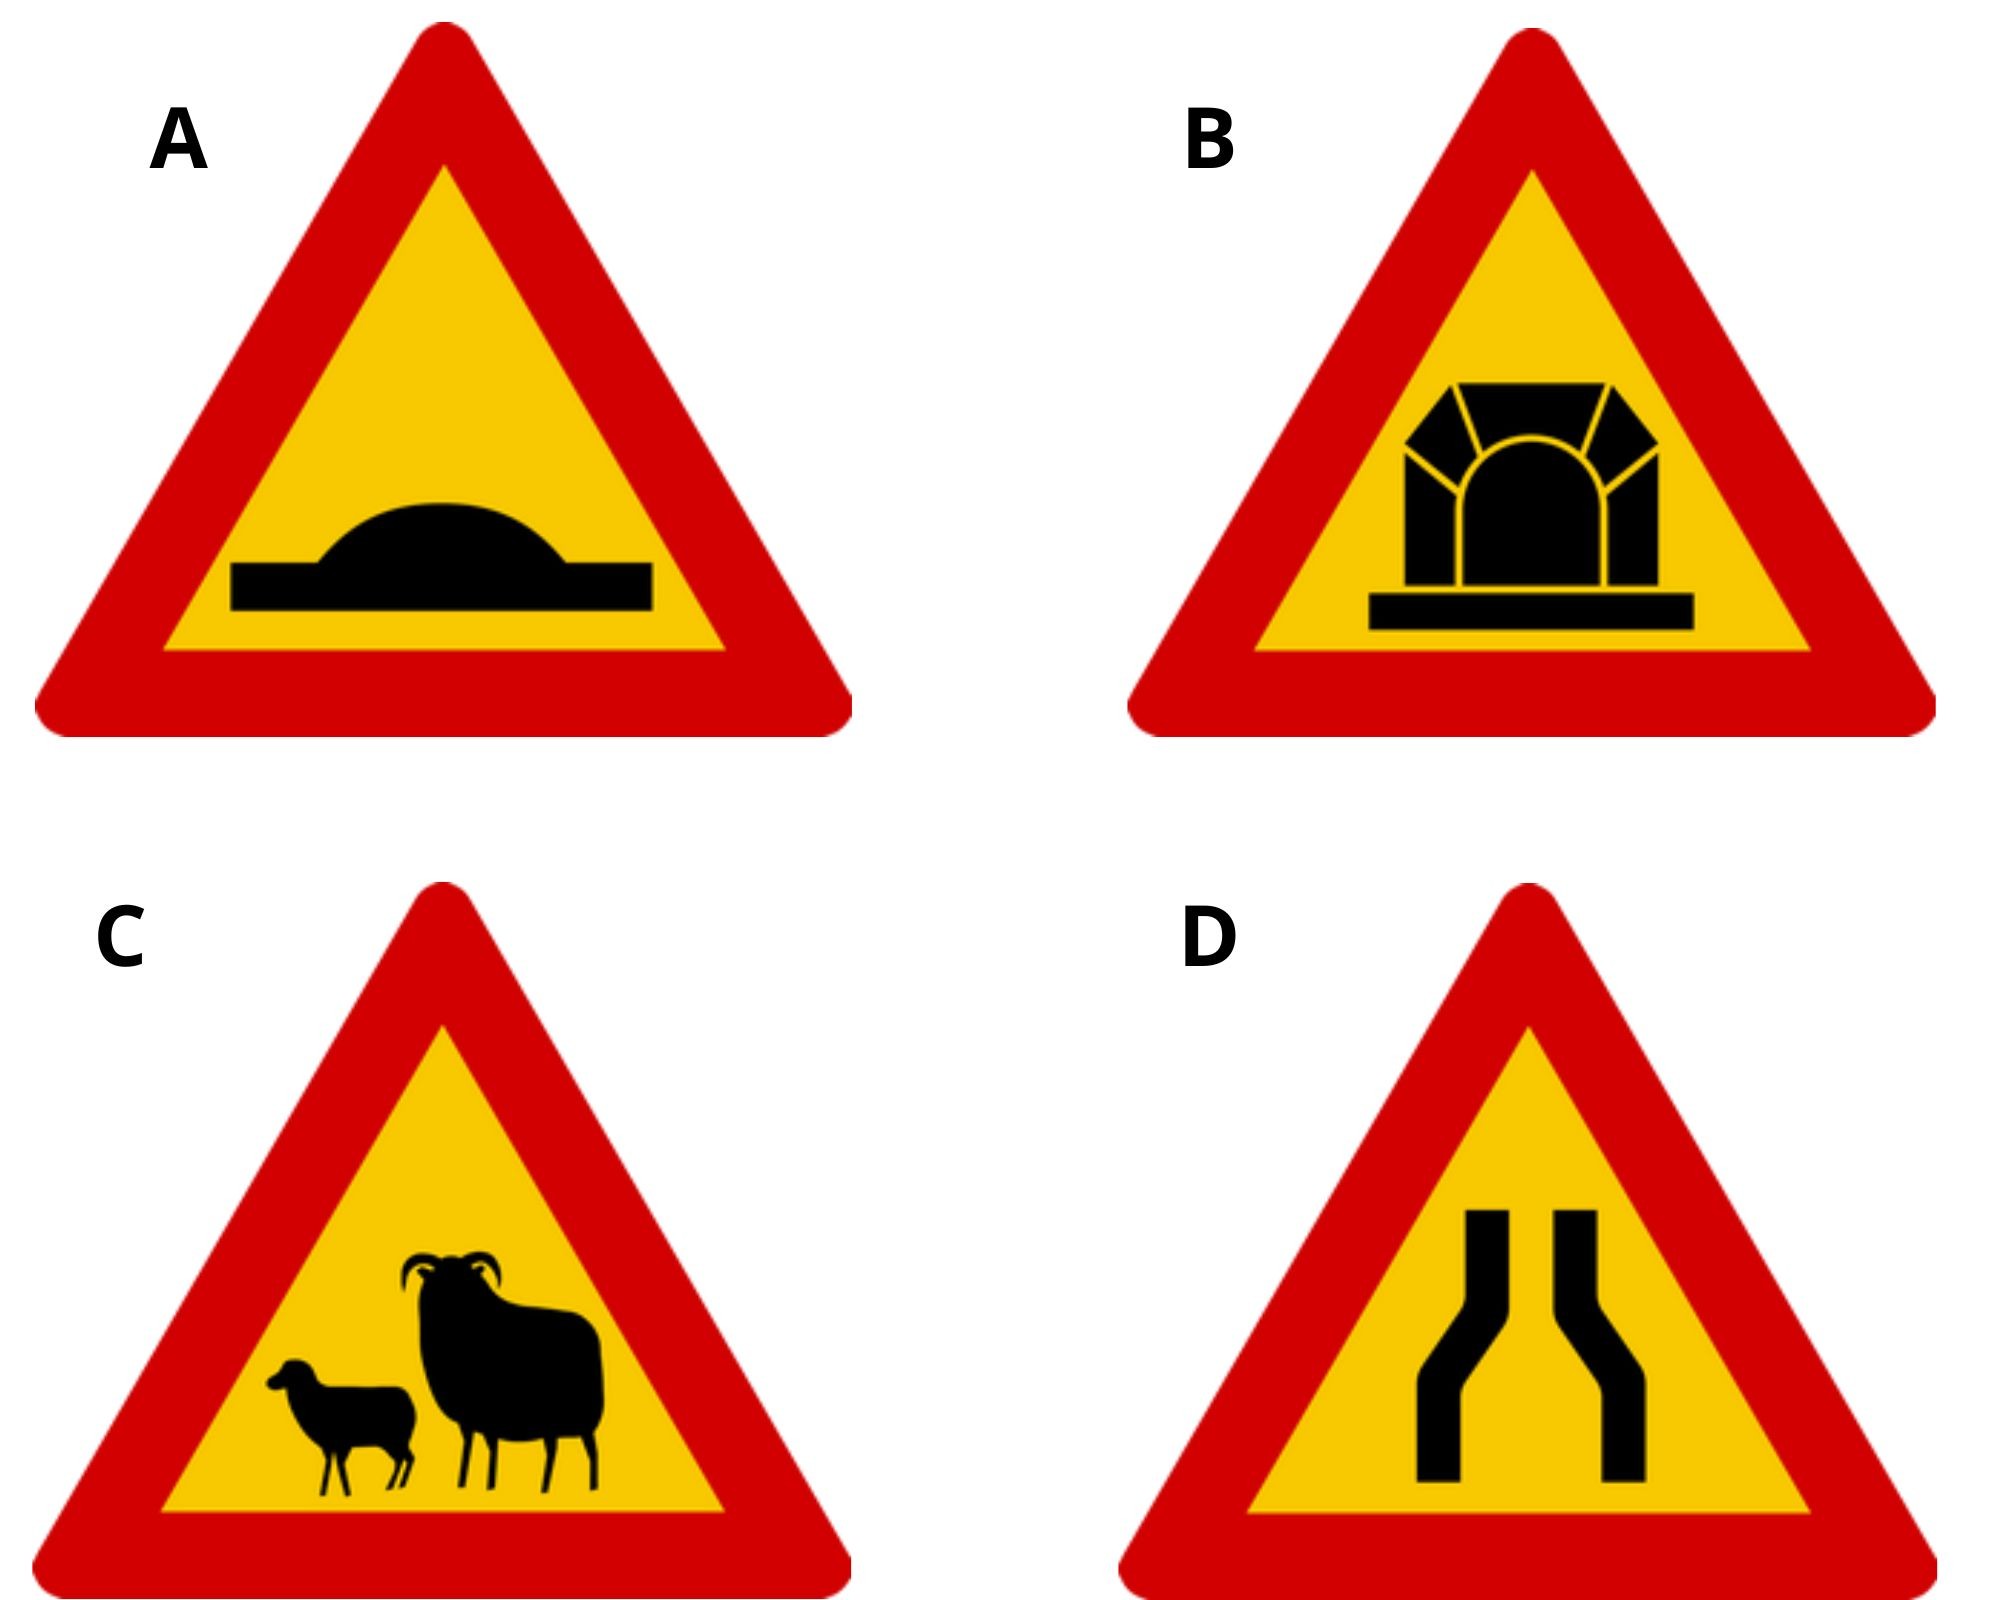 Icelandic road signs